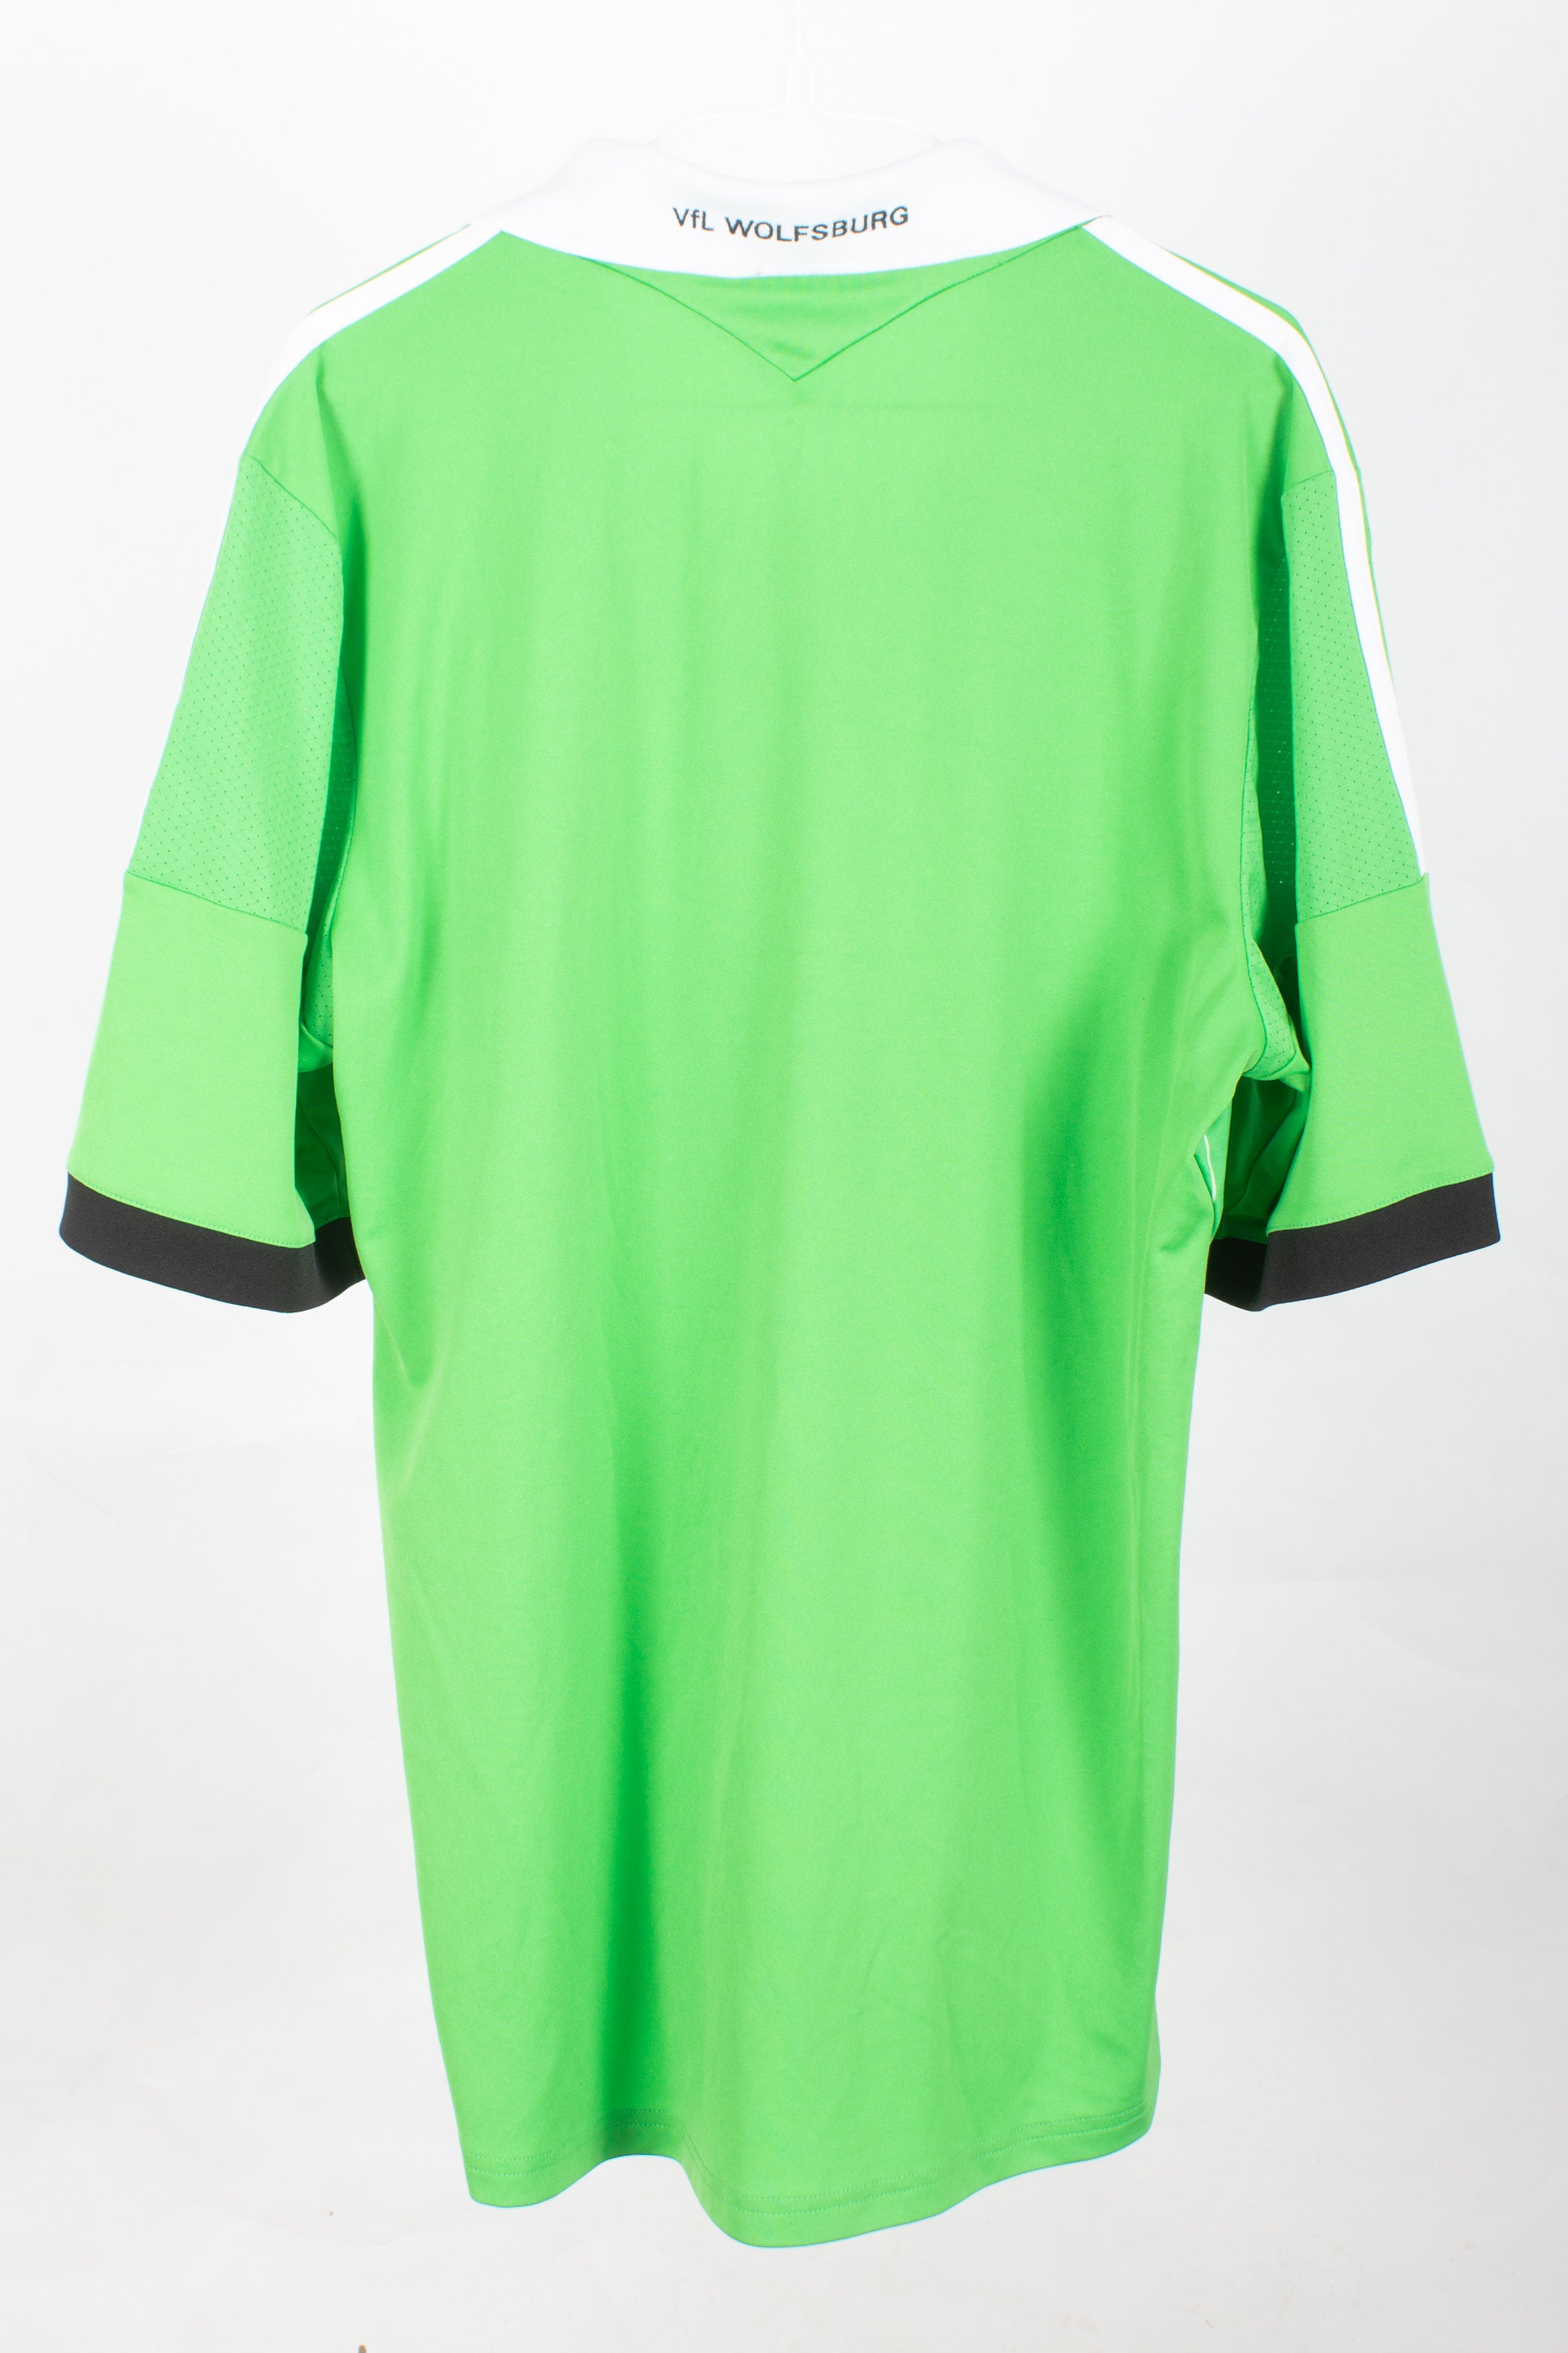 Wolfsburg 2013/14 Away Shirt (L)